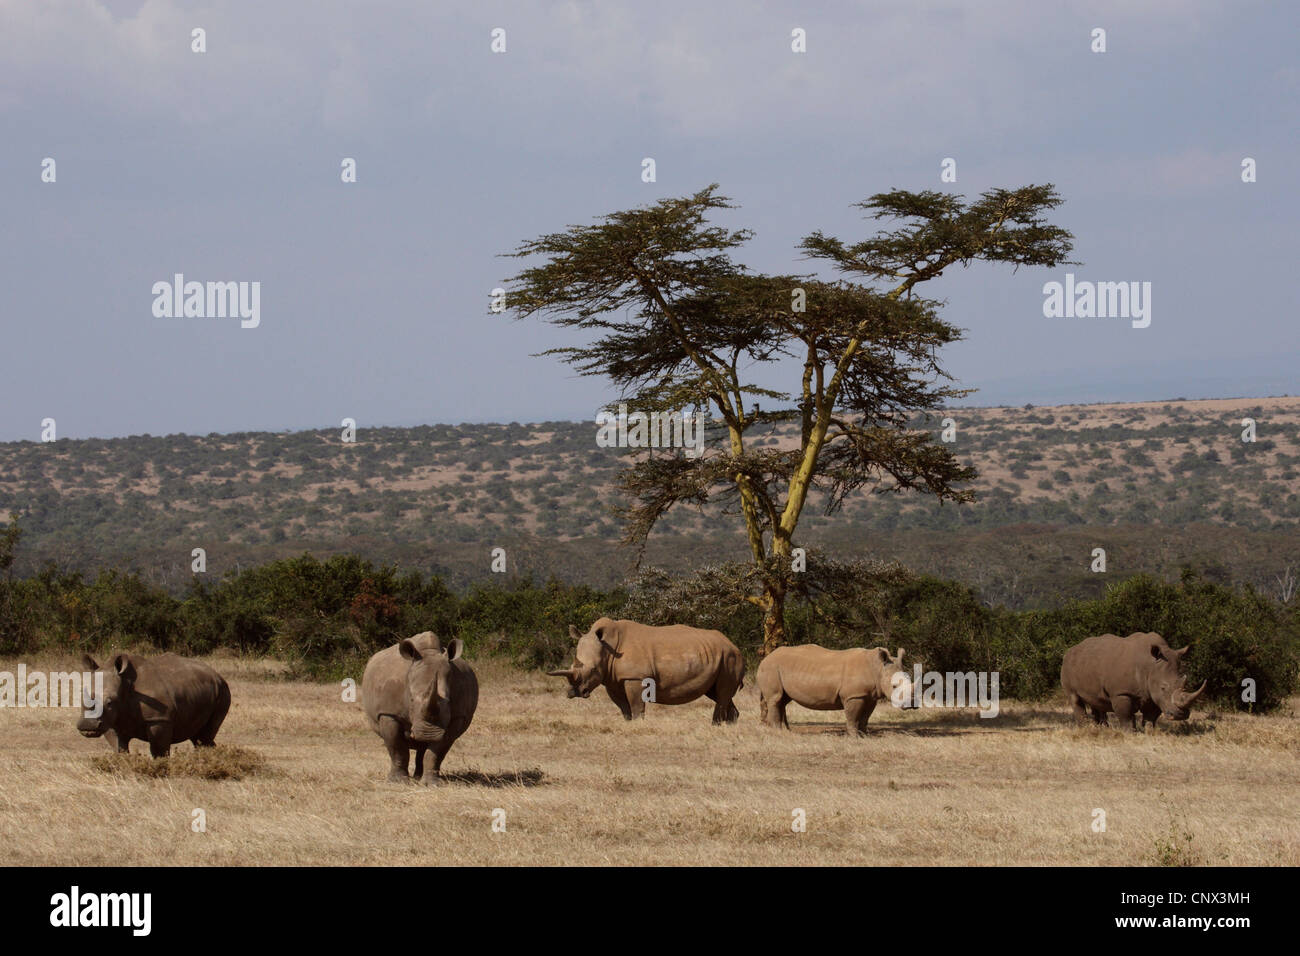 Rinoceronte bianco, quadrato-rhinoceros a labbro, erba rinoceronte (Ceratotherium simum), allevamento nella savana, Kenya Foto Stock